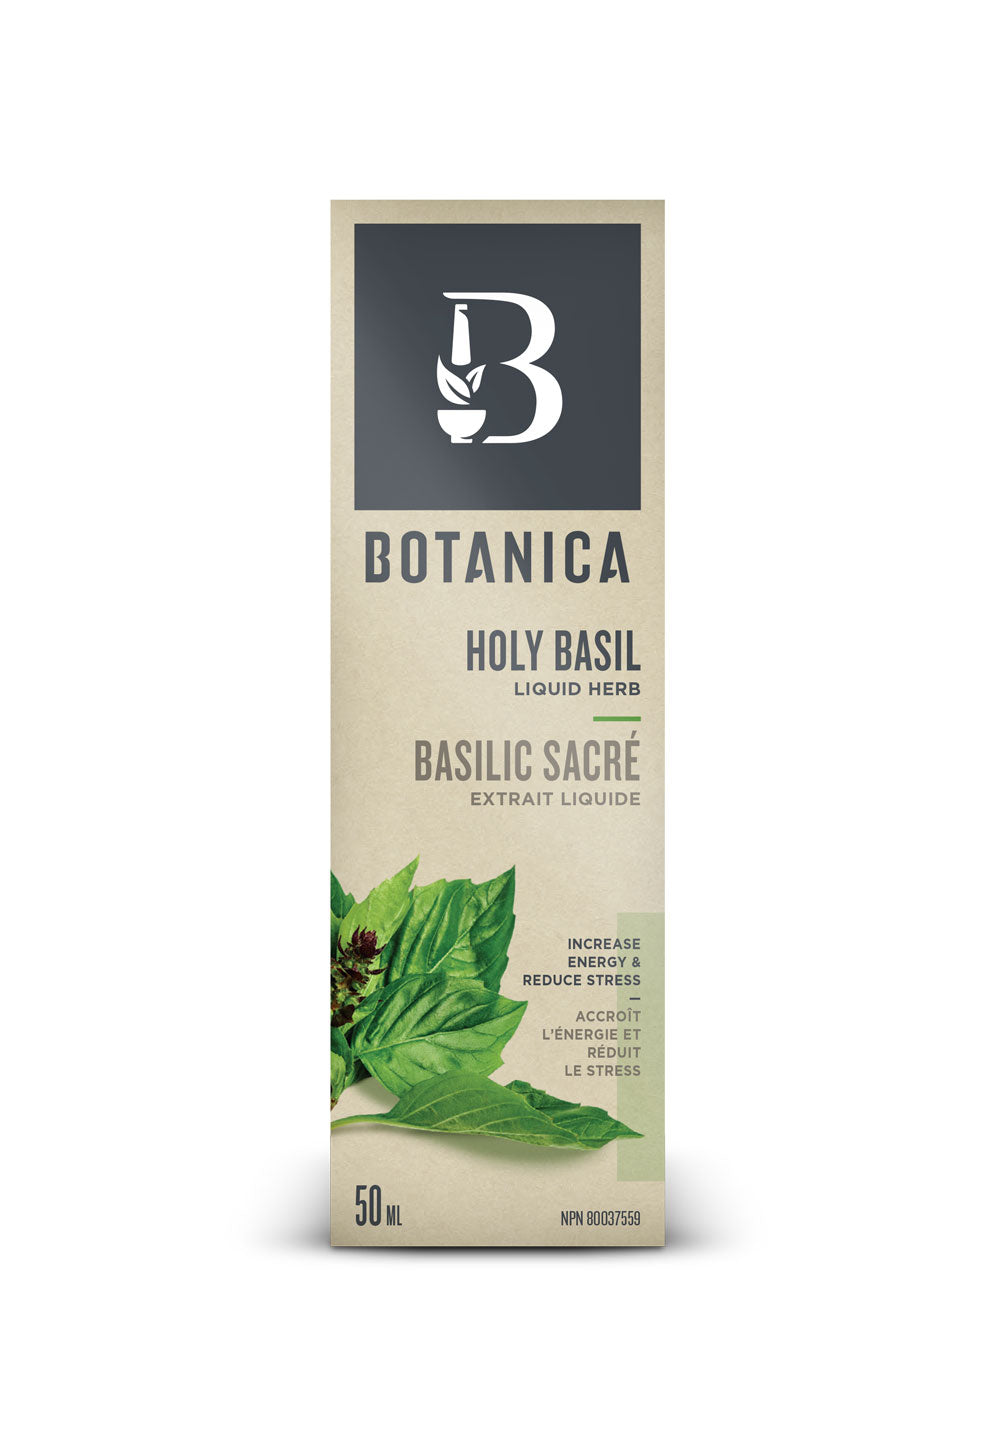 Botanica Holy Basil Liquid Herb (50ml) - Lifestyle Markets